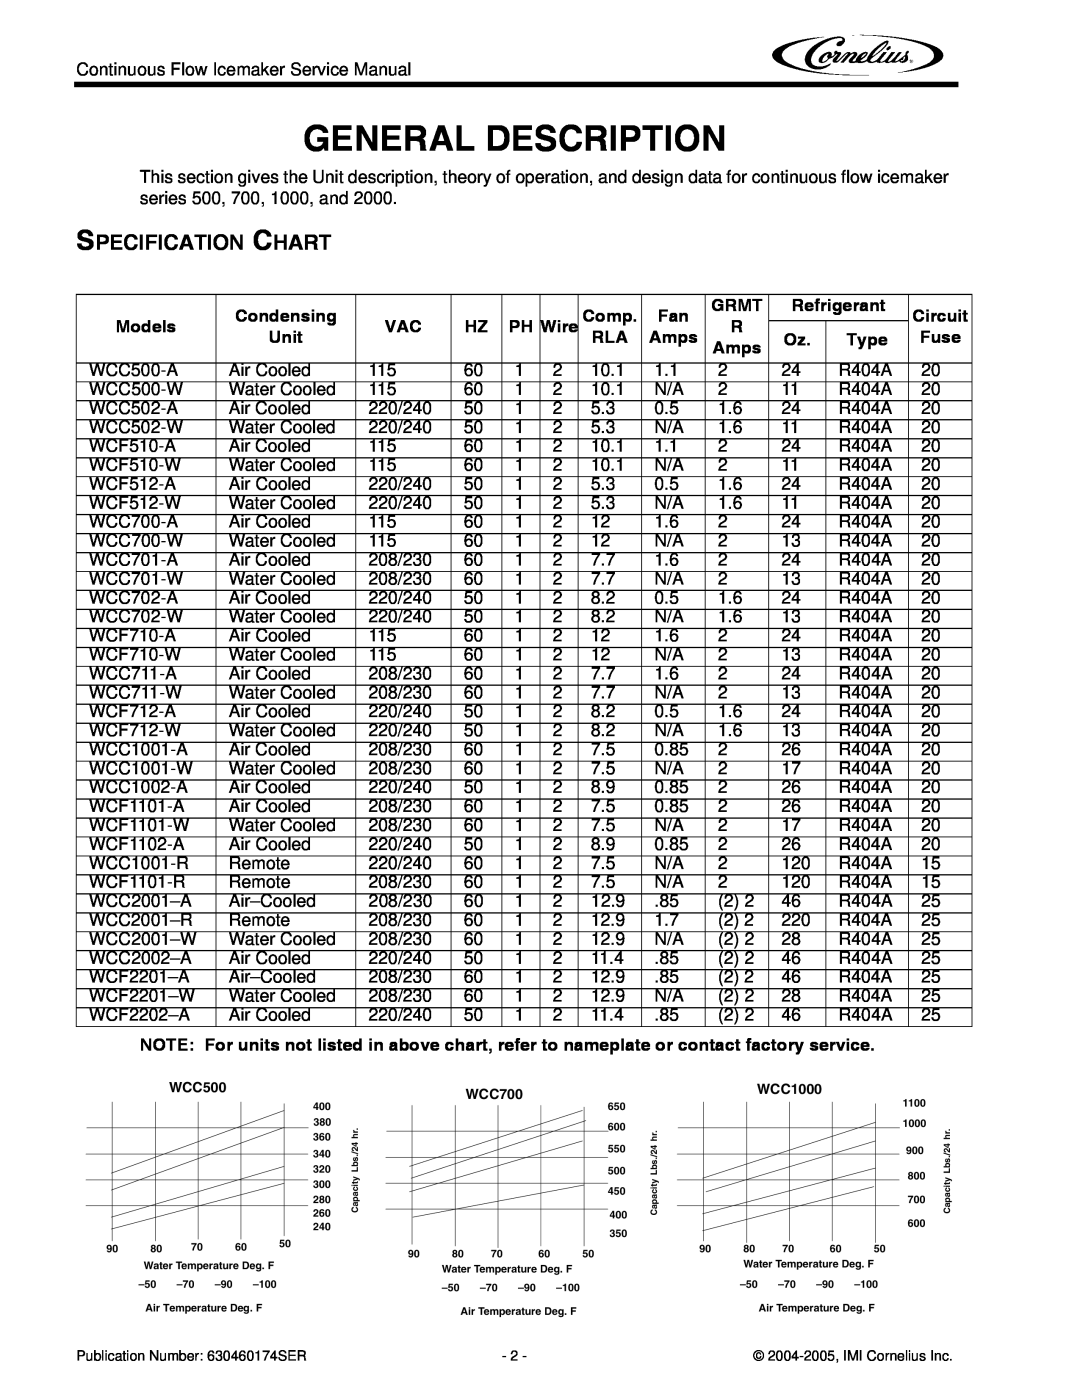 Cornelius 1000 General Description, Specification Chart, Condensing, Comp, Grmt, Refrigerant, Circuit, Models, Type, Unit 